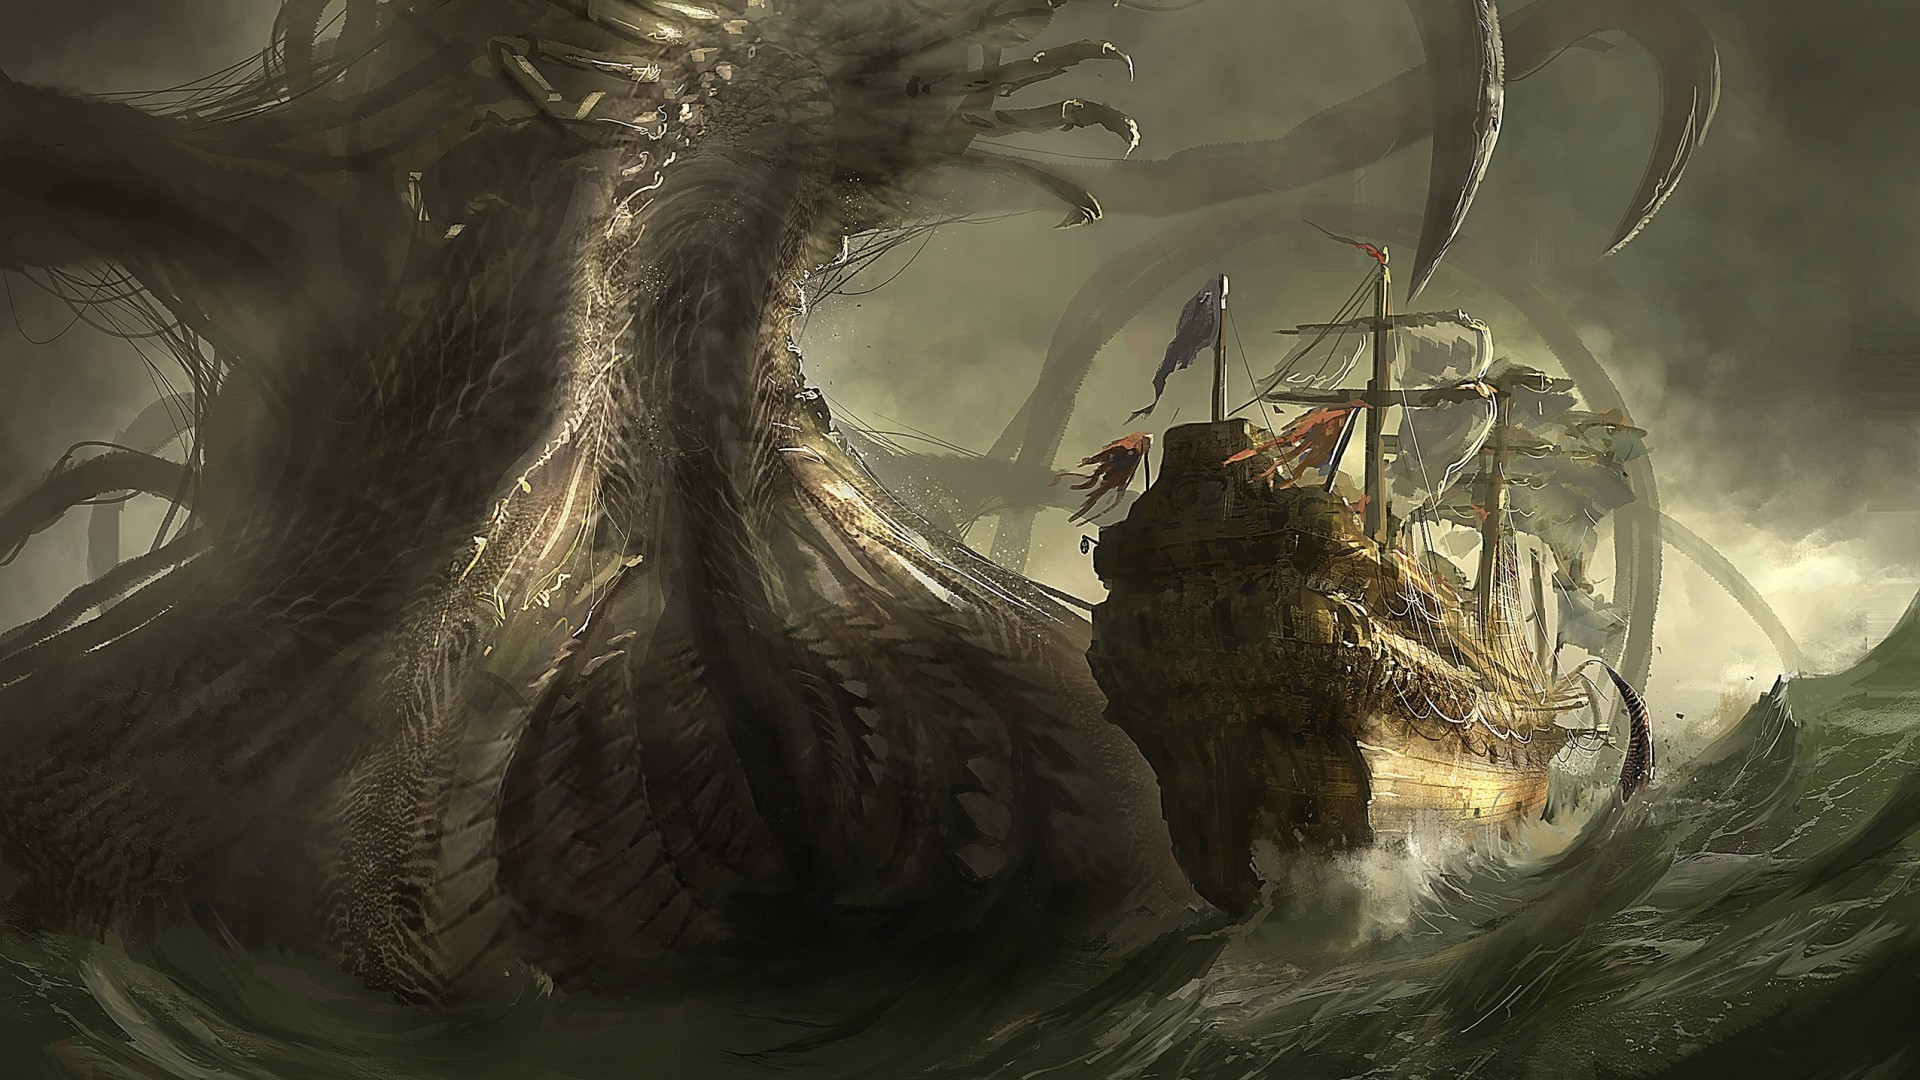 Open Mouth, Fantasy Art, Digital Art, Pixelated, Artwork, - Pirate Ship The Kraken - HD Wallpaper 